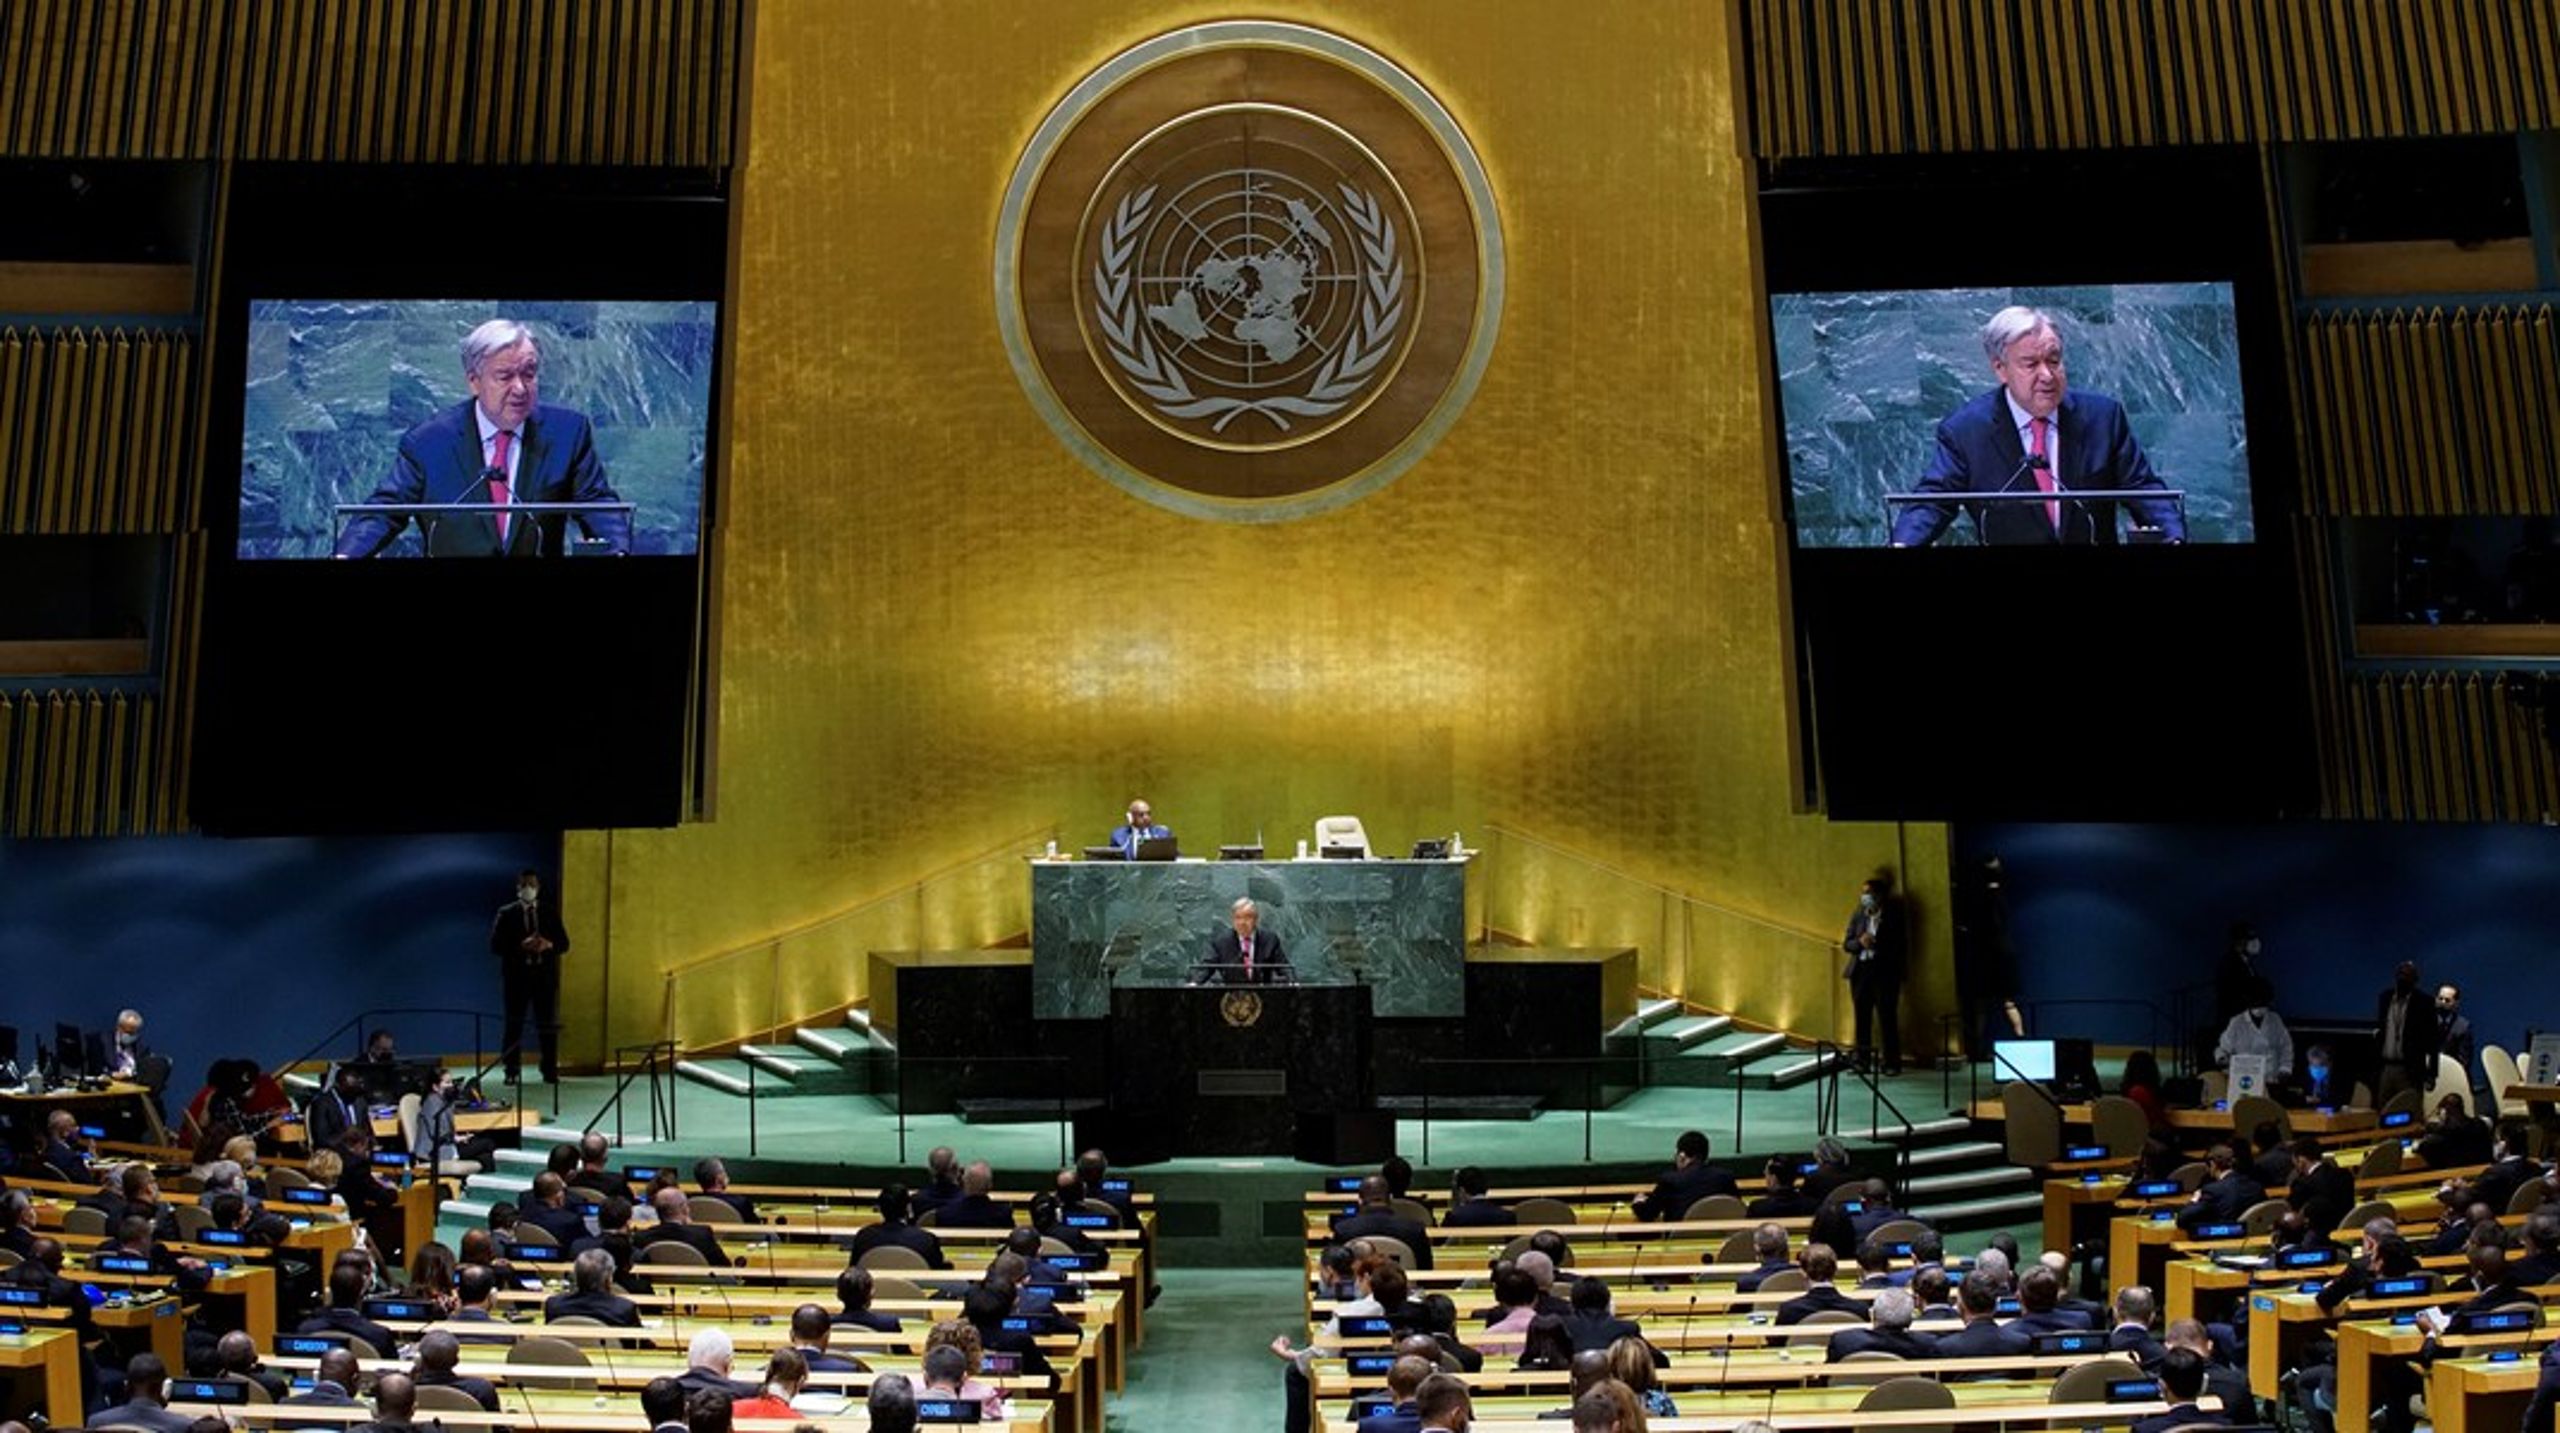 FN's generalsekretær&nbsp;António Guterres&nbsp;fremhævede ved&nbsp;den seneste generalforsamling,&nbsp;hvordan globale kriser&nbsp;har skabt mistillid til demokratiet. Det kan etisk digitalisering rette op på, mener direktør i Global Affairs&nbsp;Niels Tanderup.